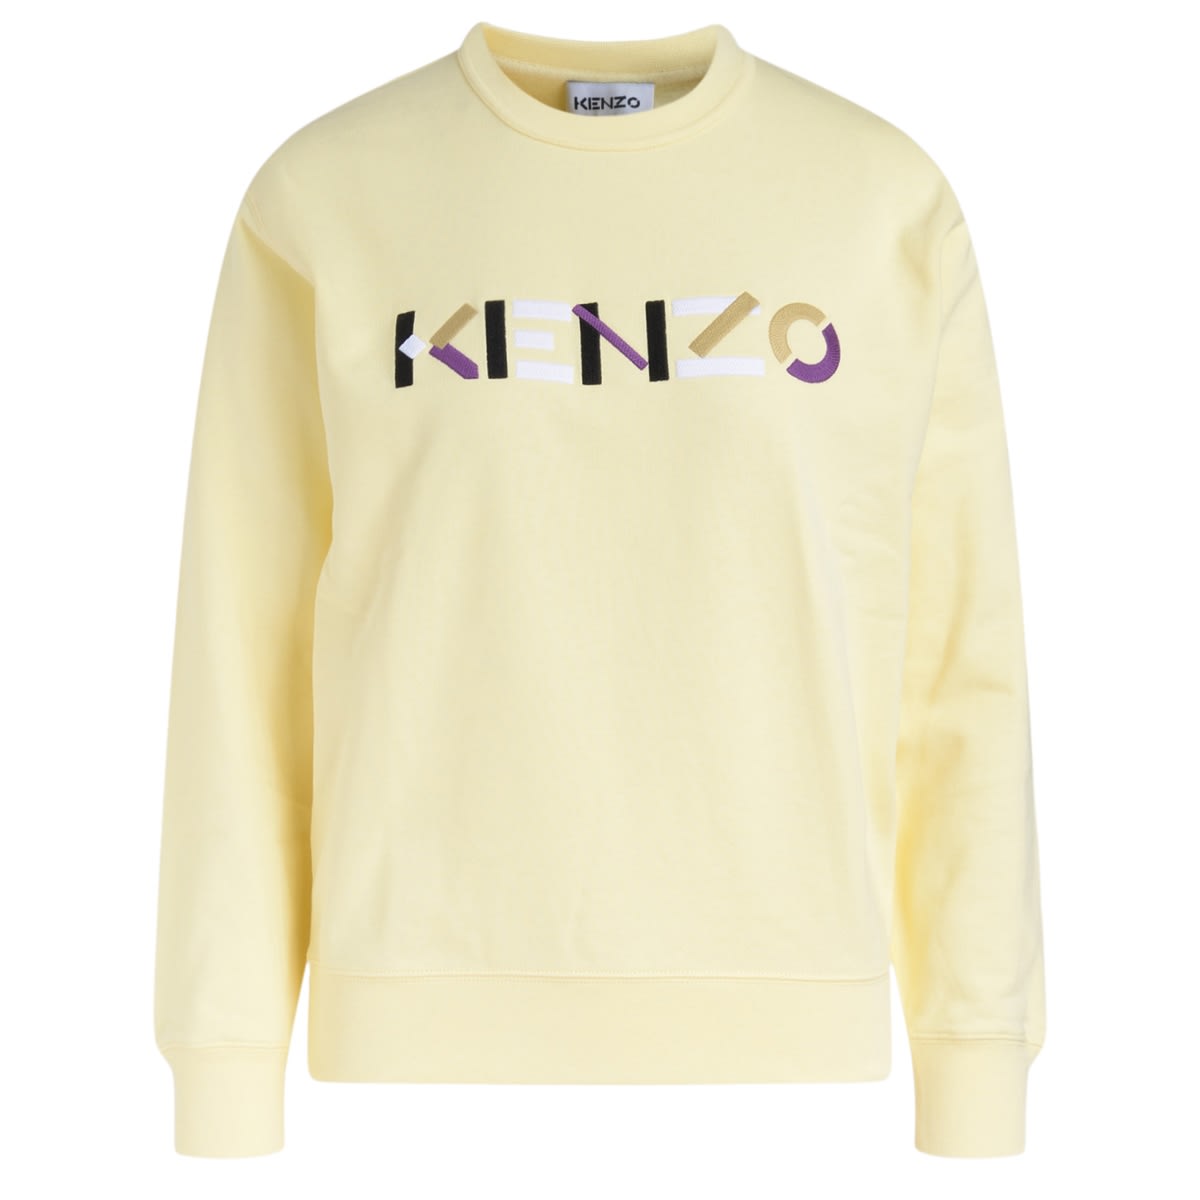 Kenzo logo womens sweatshirt in cream color